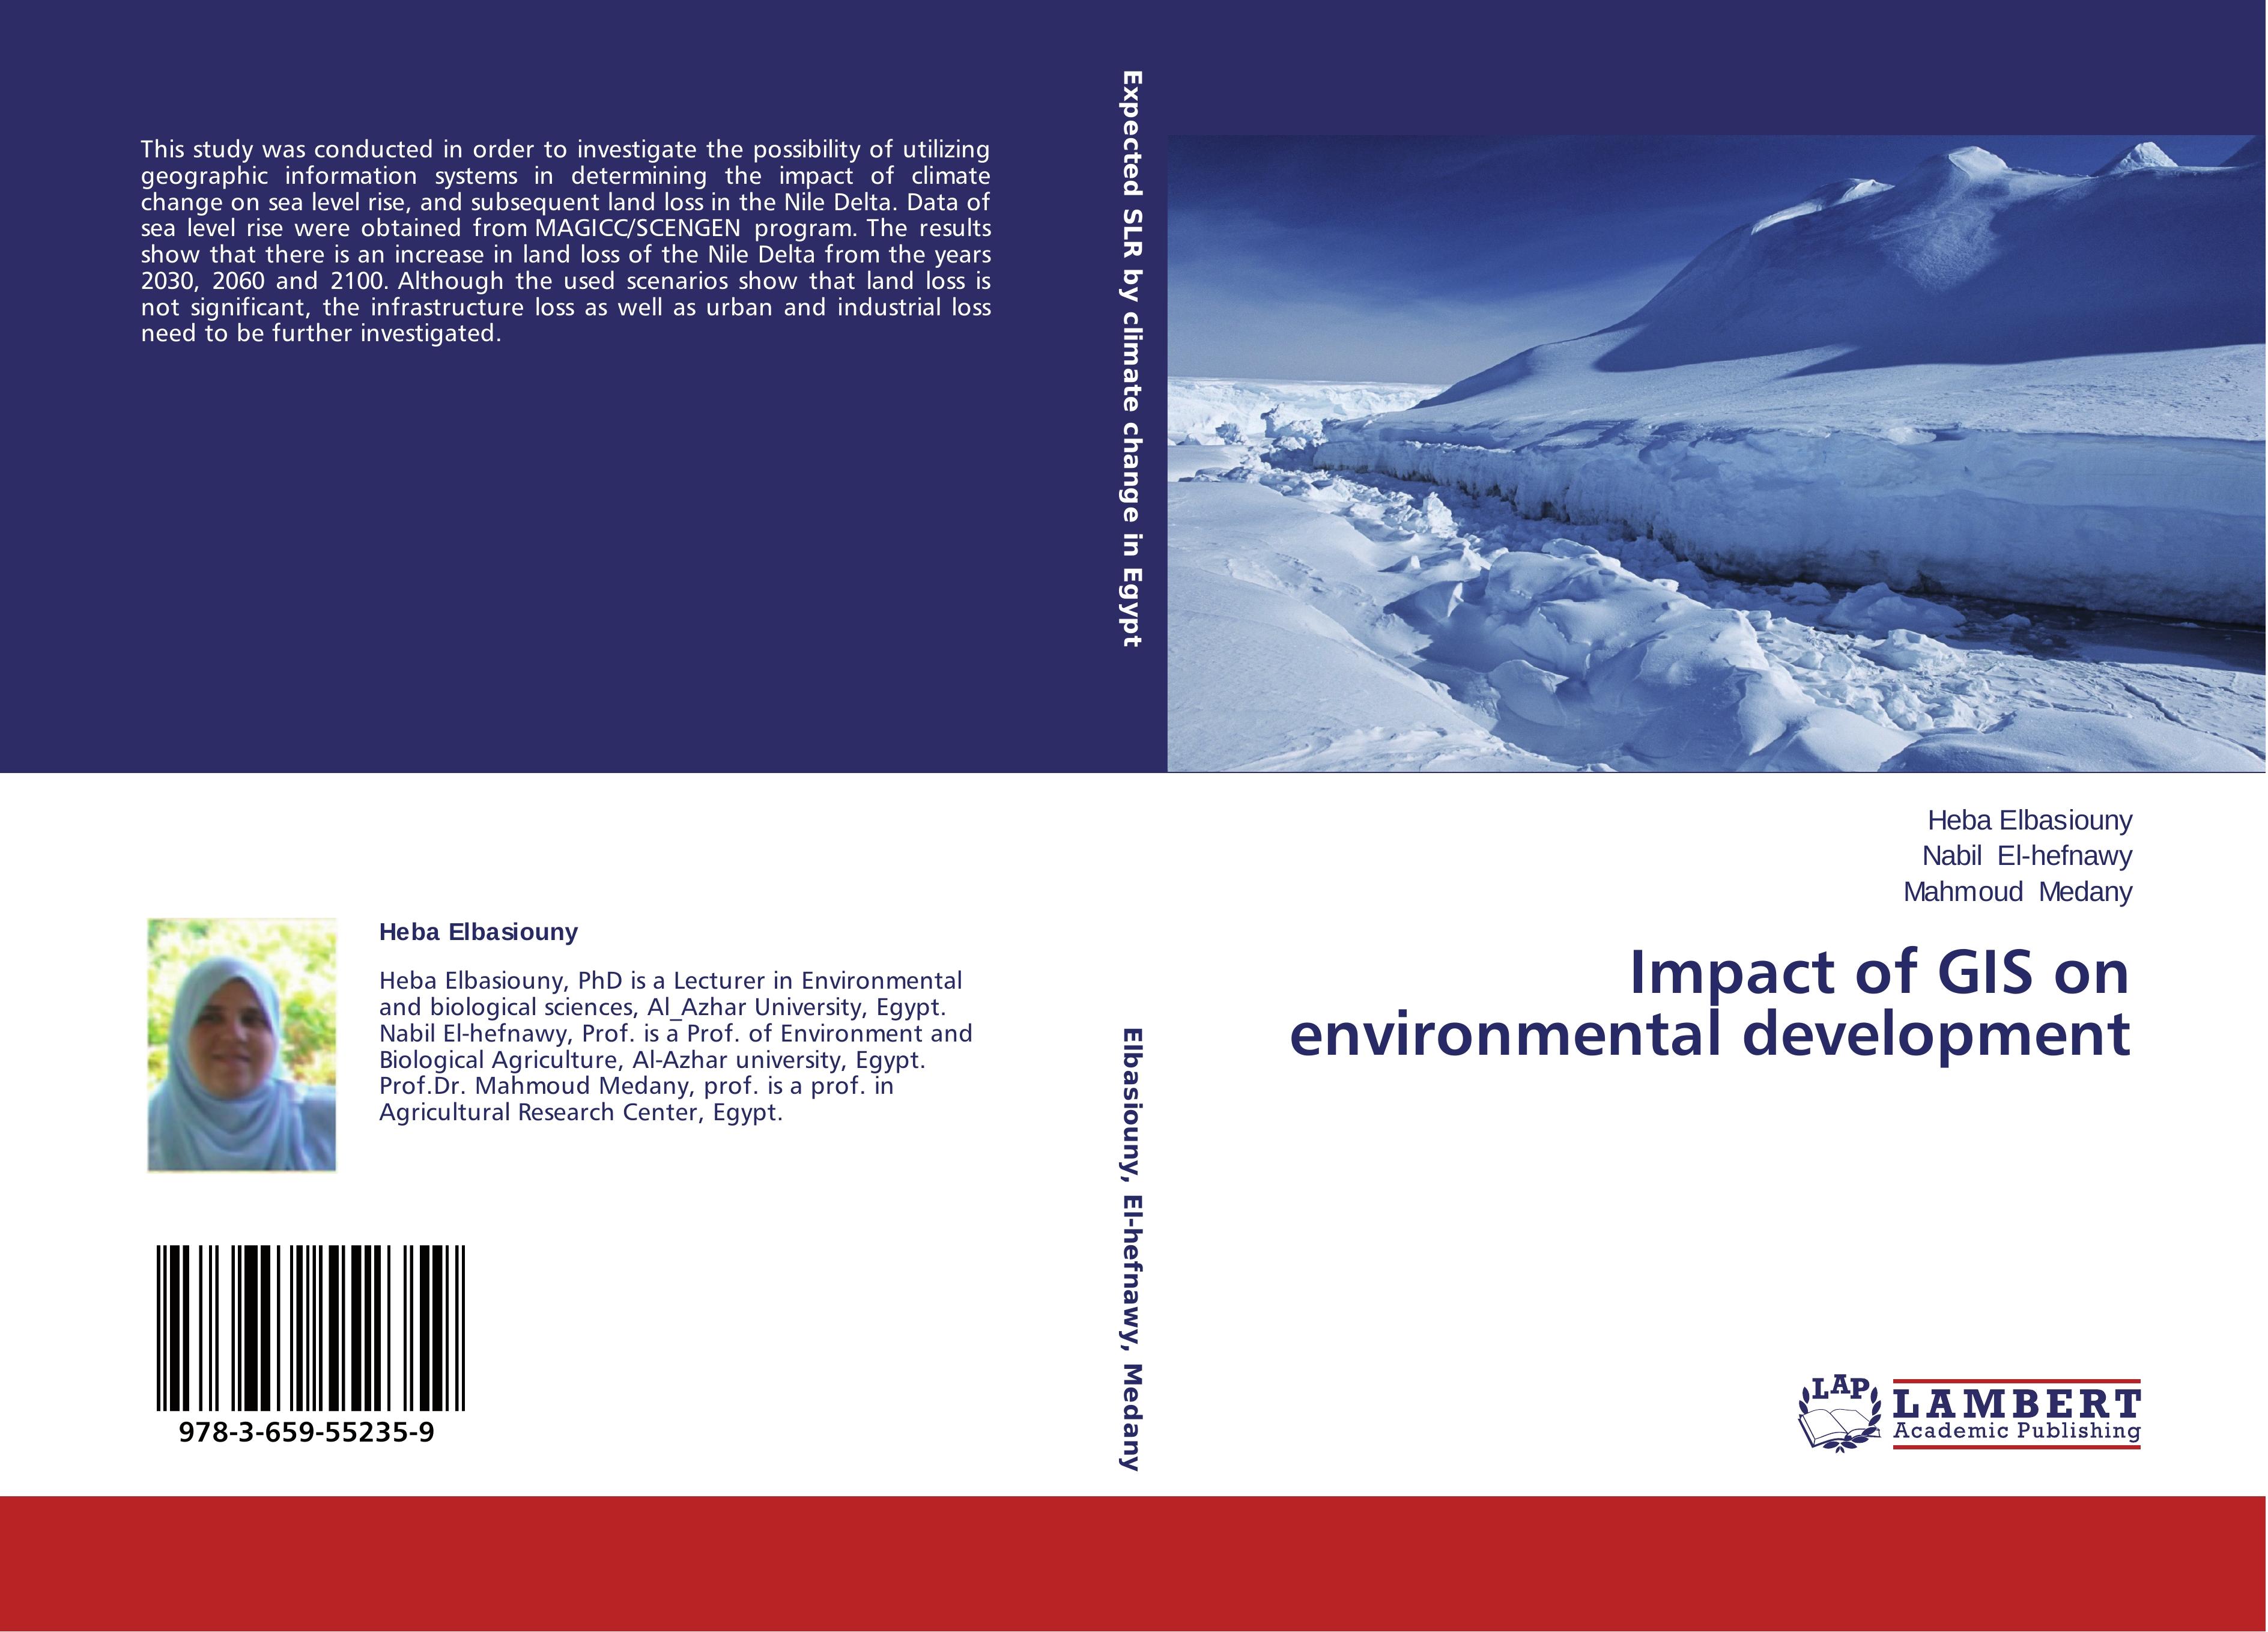 Impact of GIS on environmental development - Heba Elbasiouny|Nabil El-hefnawy|Mahmoud Medany